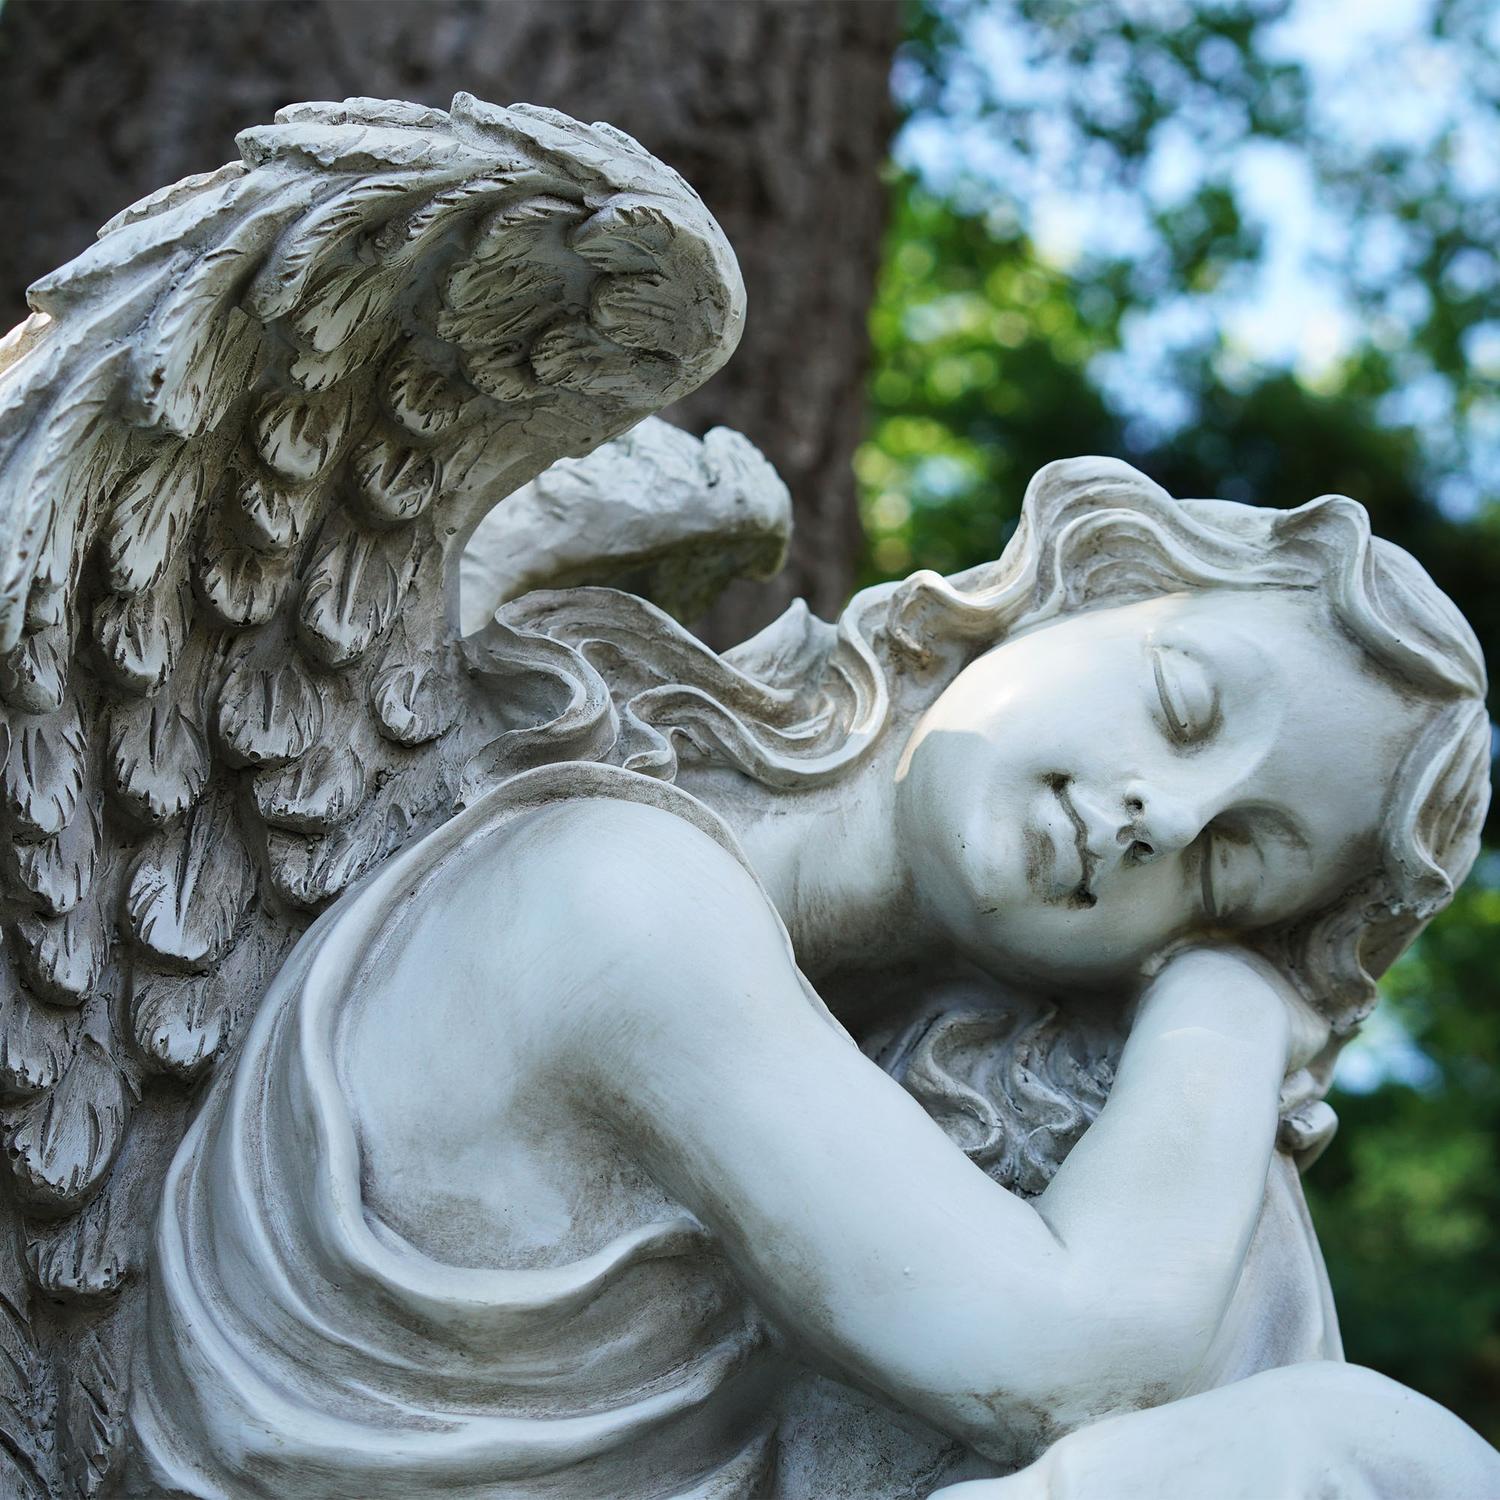 19" Resting Angel Religious Outdoor Garden Statue - image 3 of 4